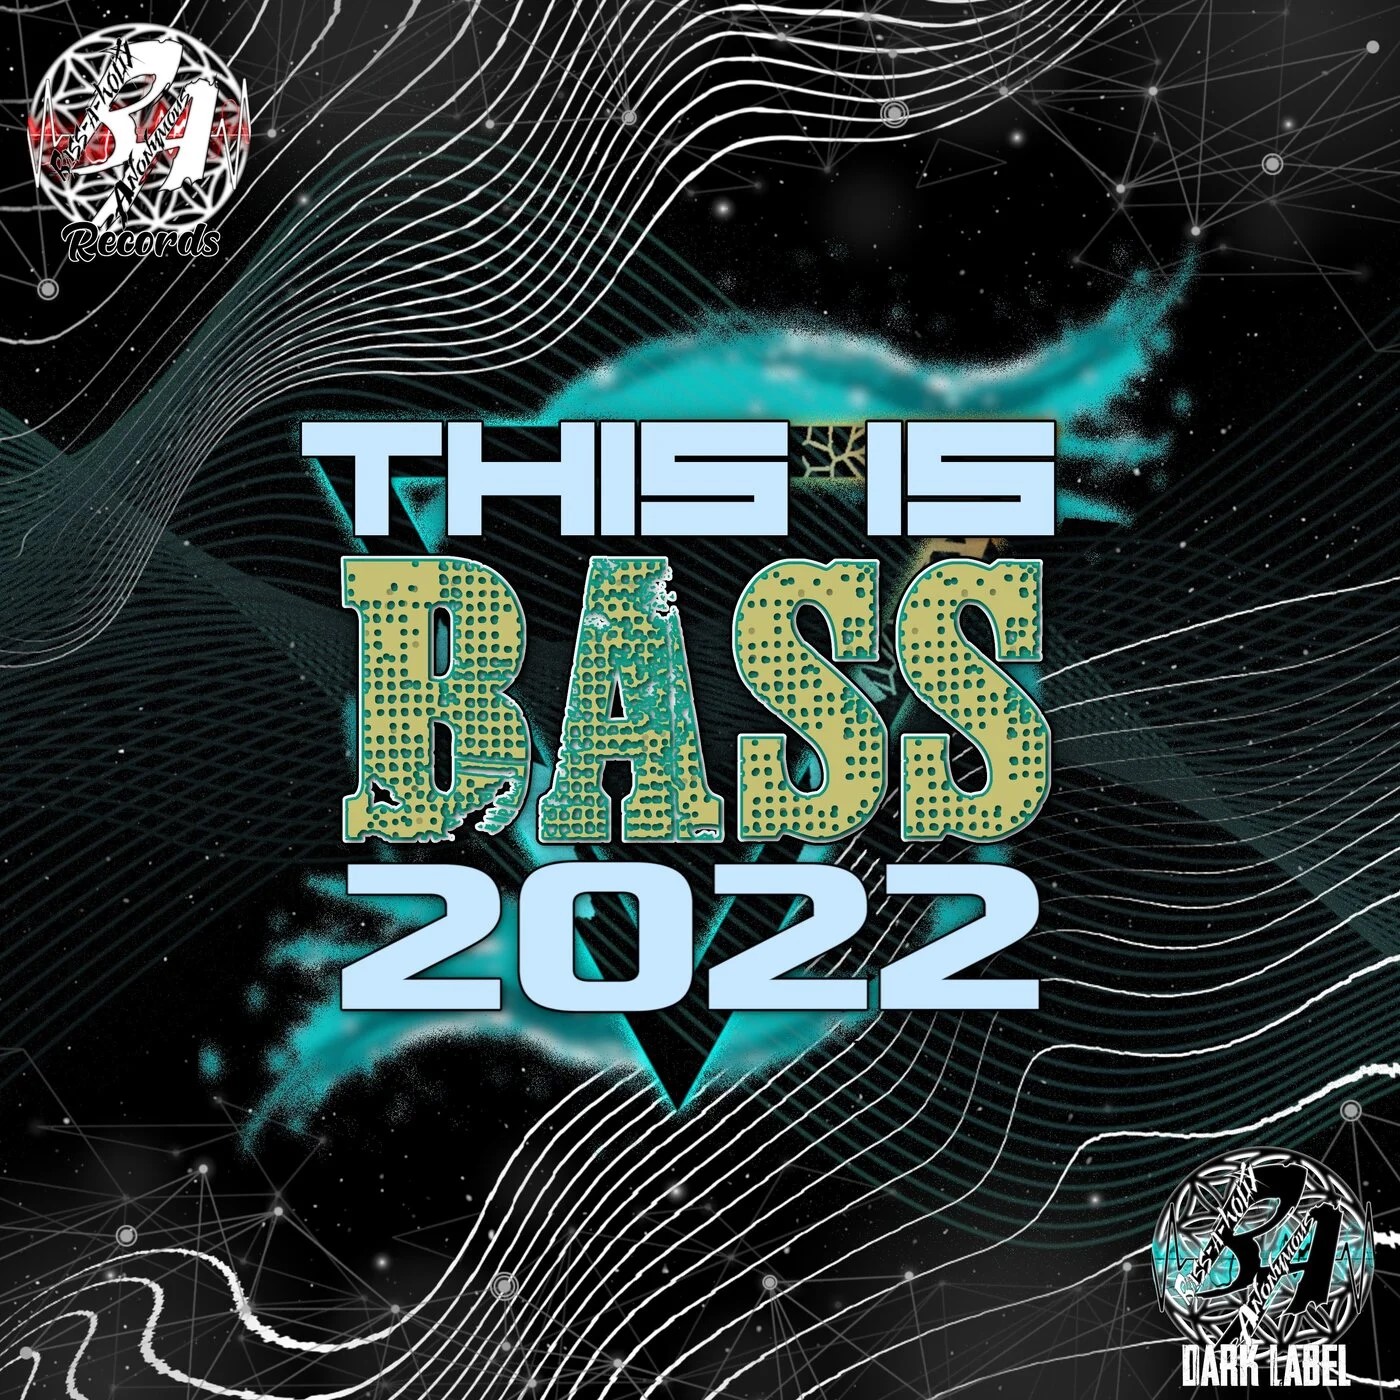 VA - This Is Bass (2022) [16bit Flac]